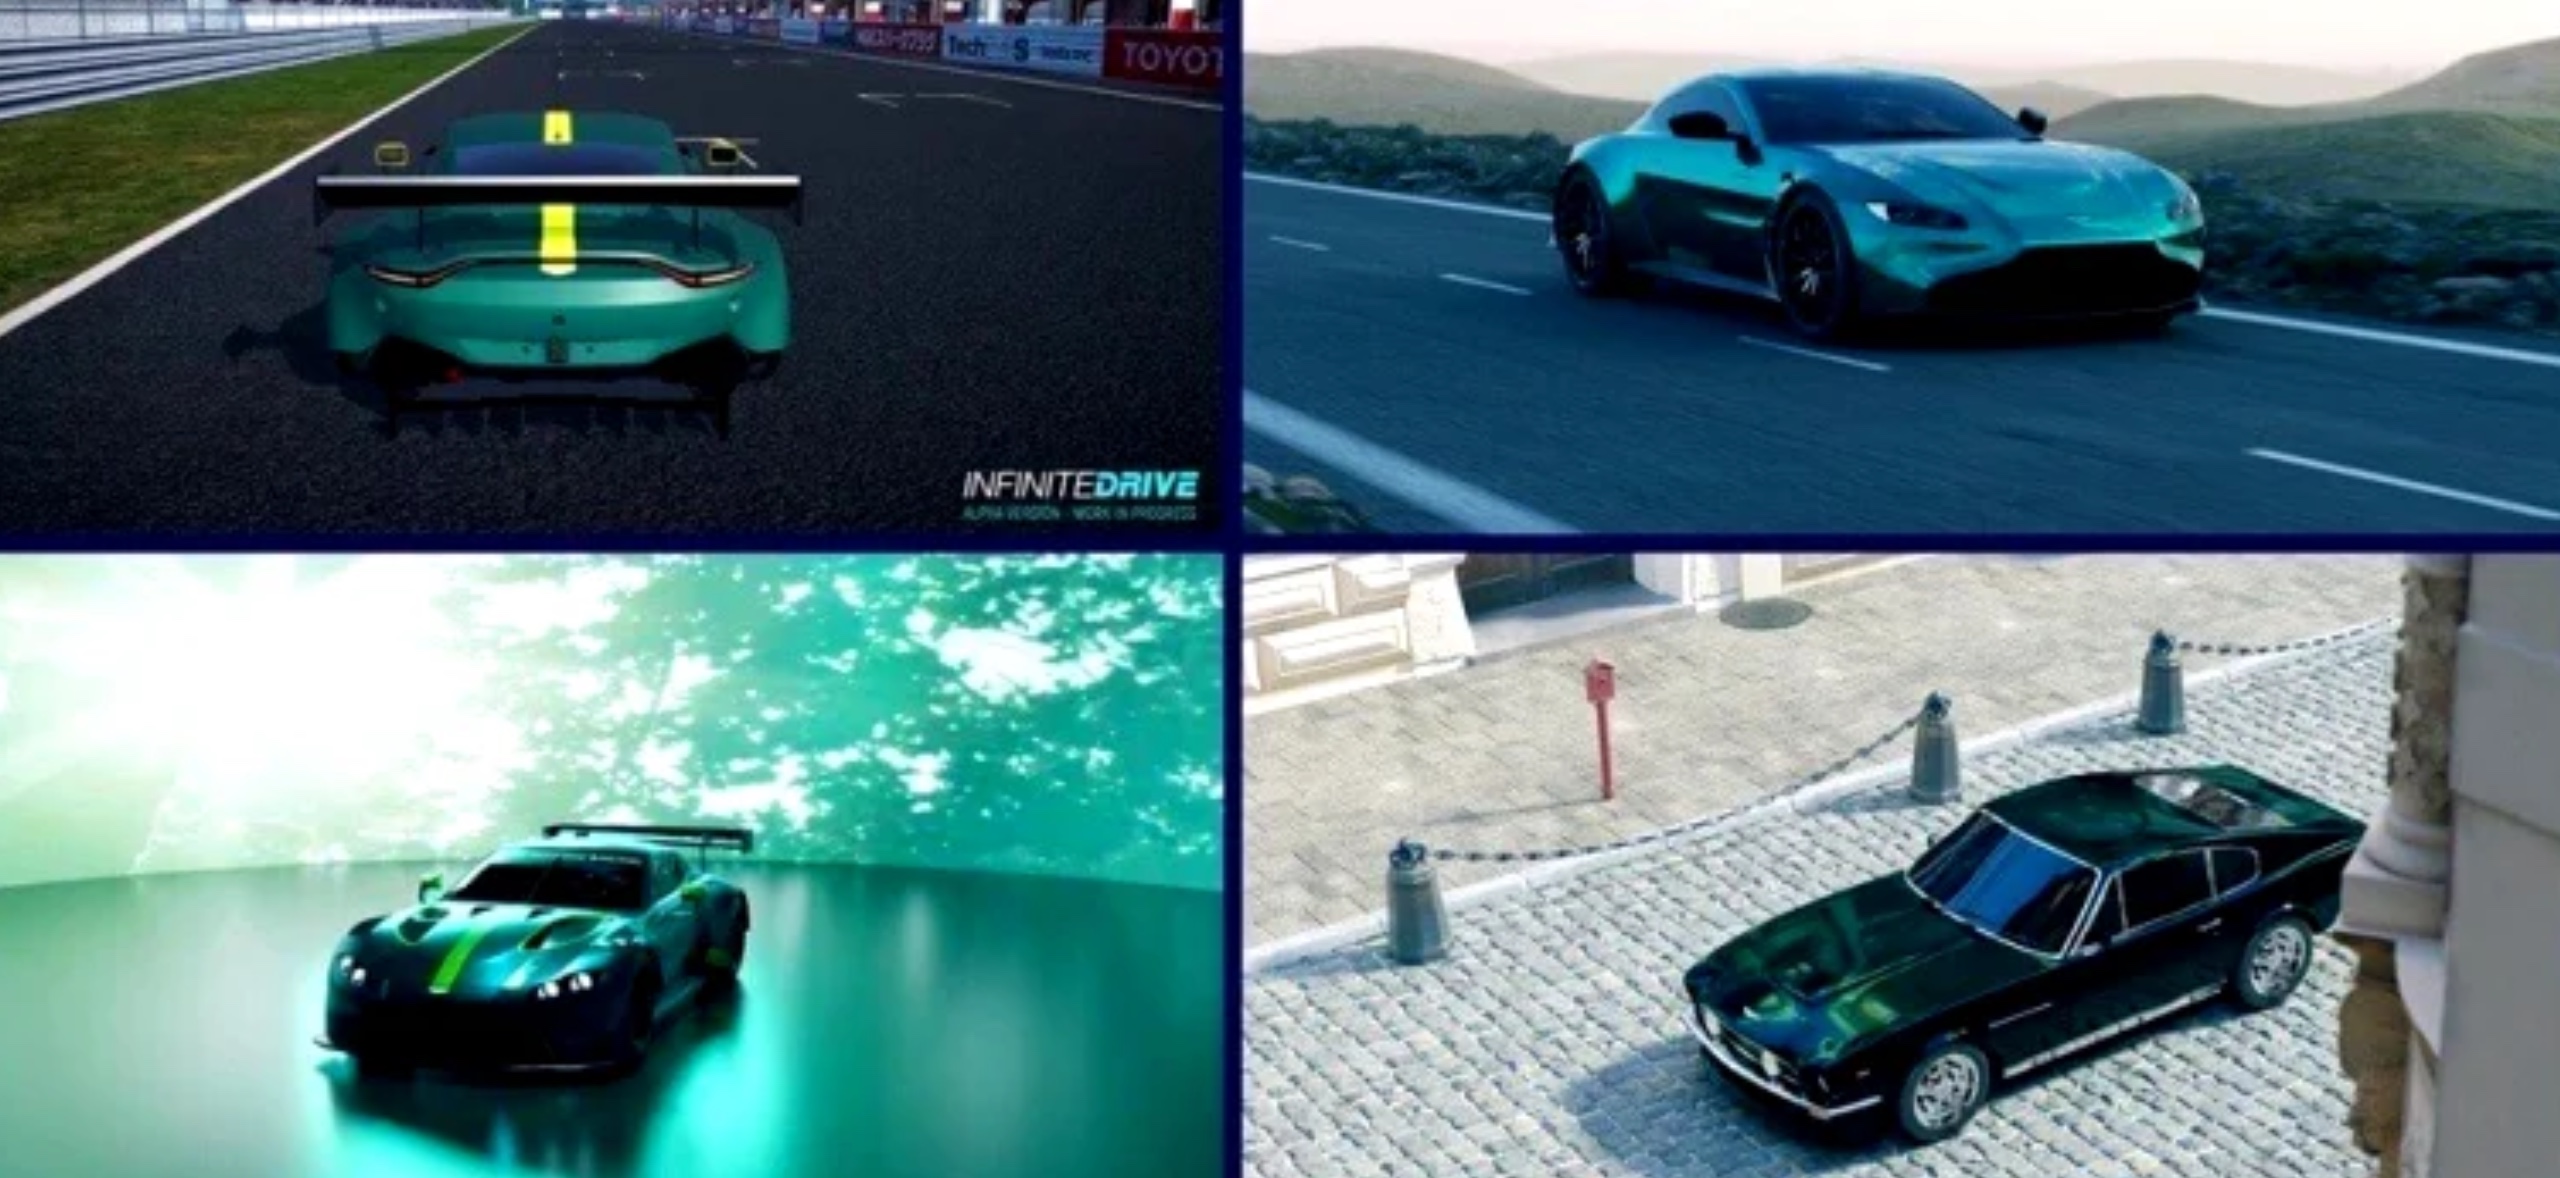 EV Run-Down: Honda gaat VR gebruiken, Zwitserland overweegt EV-verbod, Aston Martin gaat metaverse